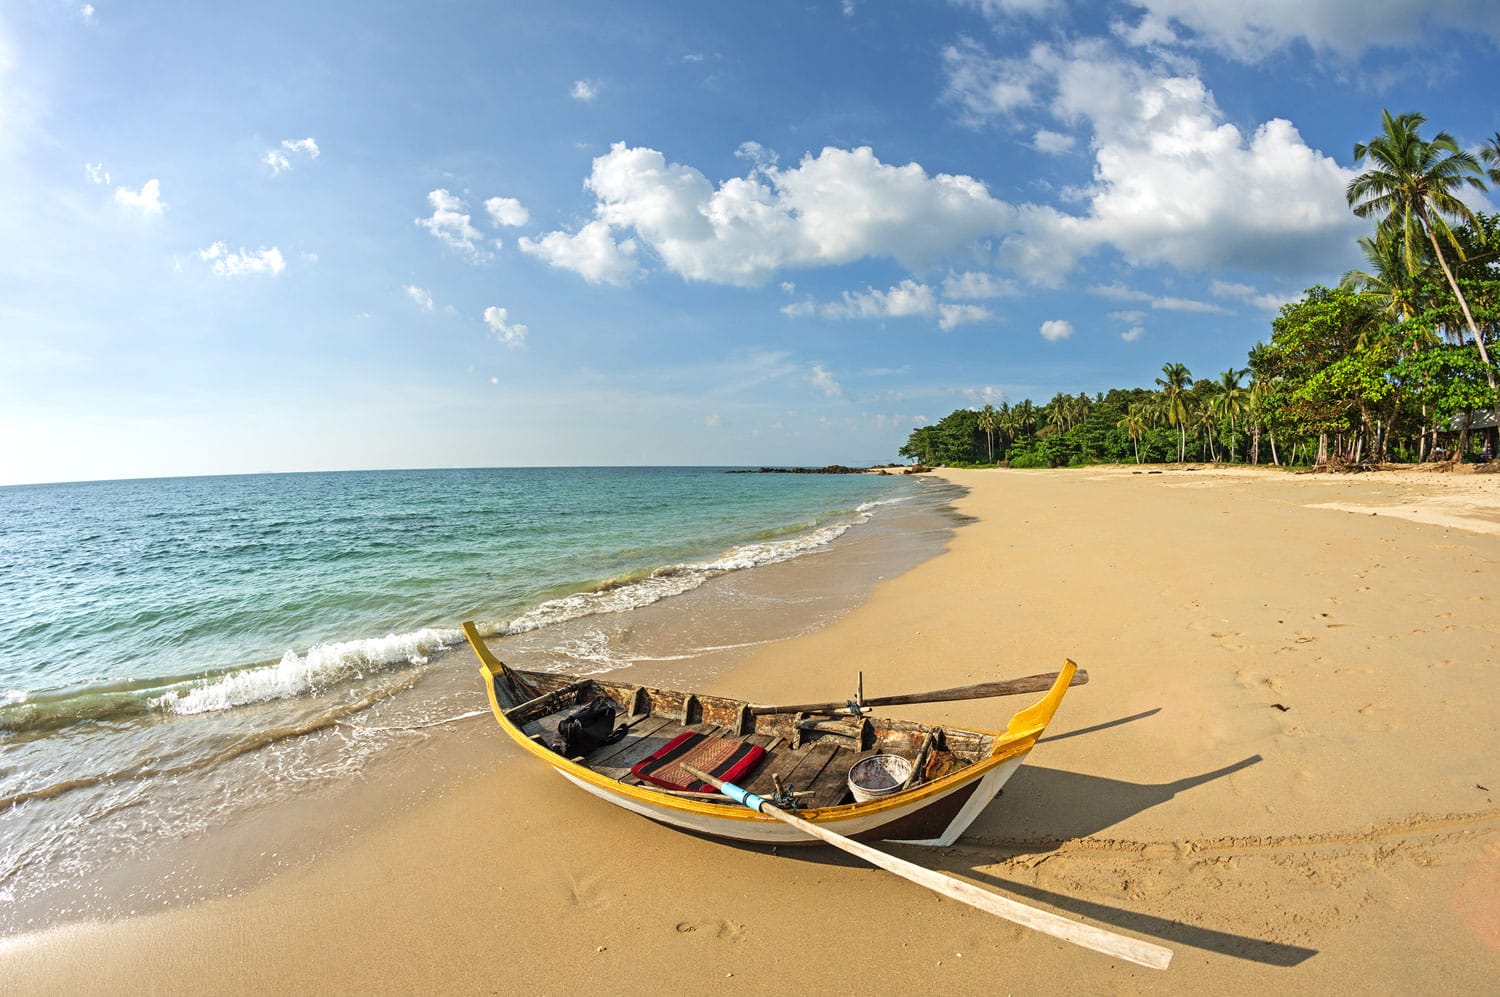 rowboat on a tropical beach in Koh Lanta Thailand